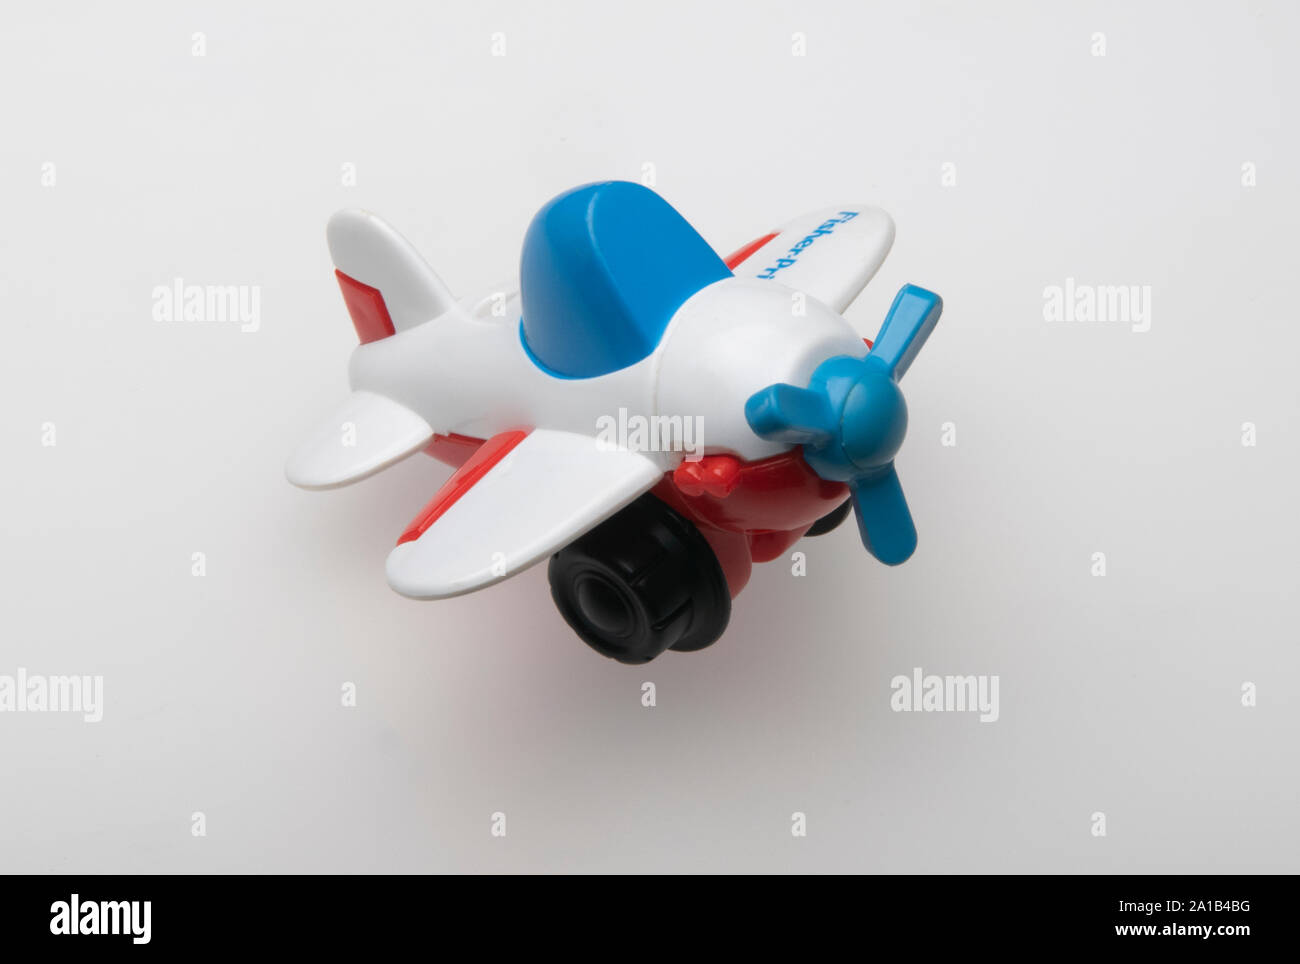 Fisher Price Toy Plane Stock Photo